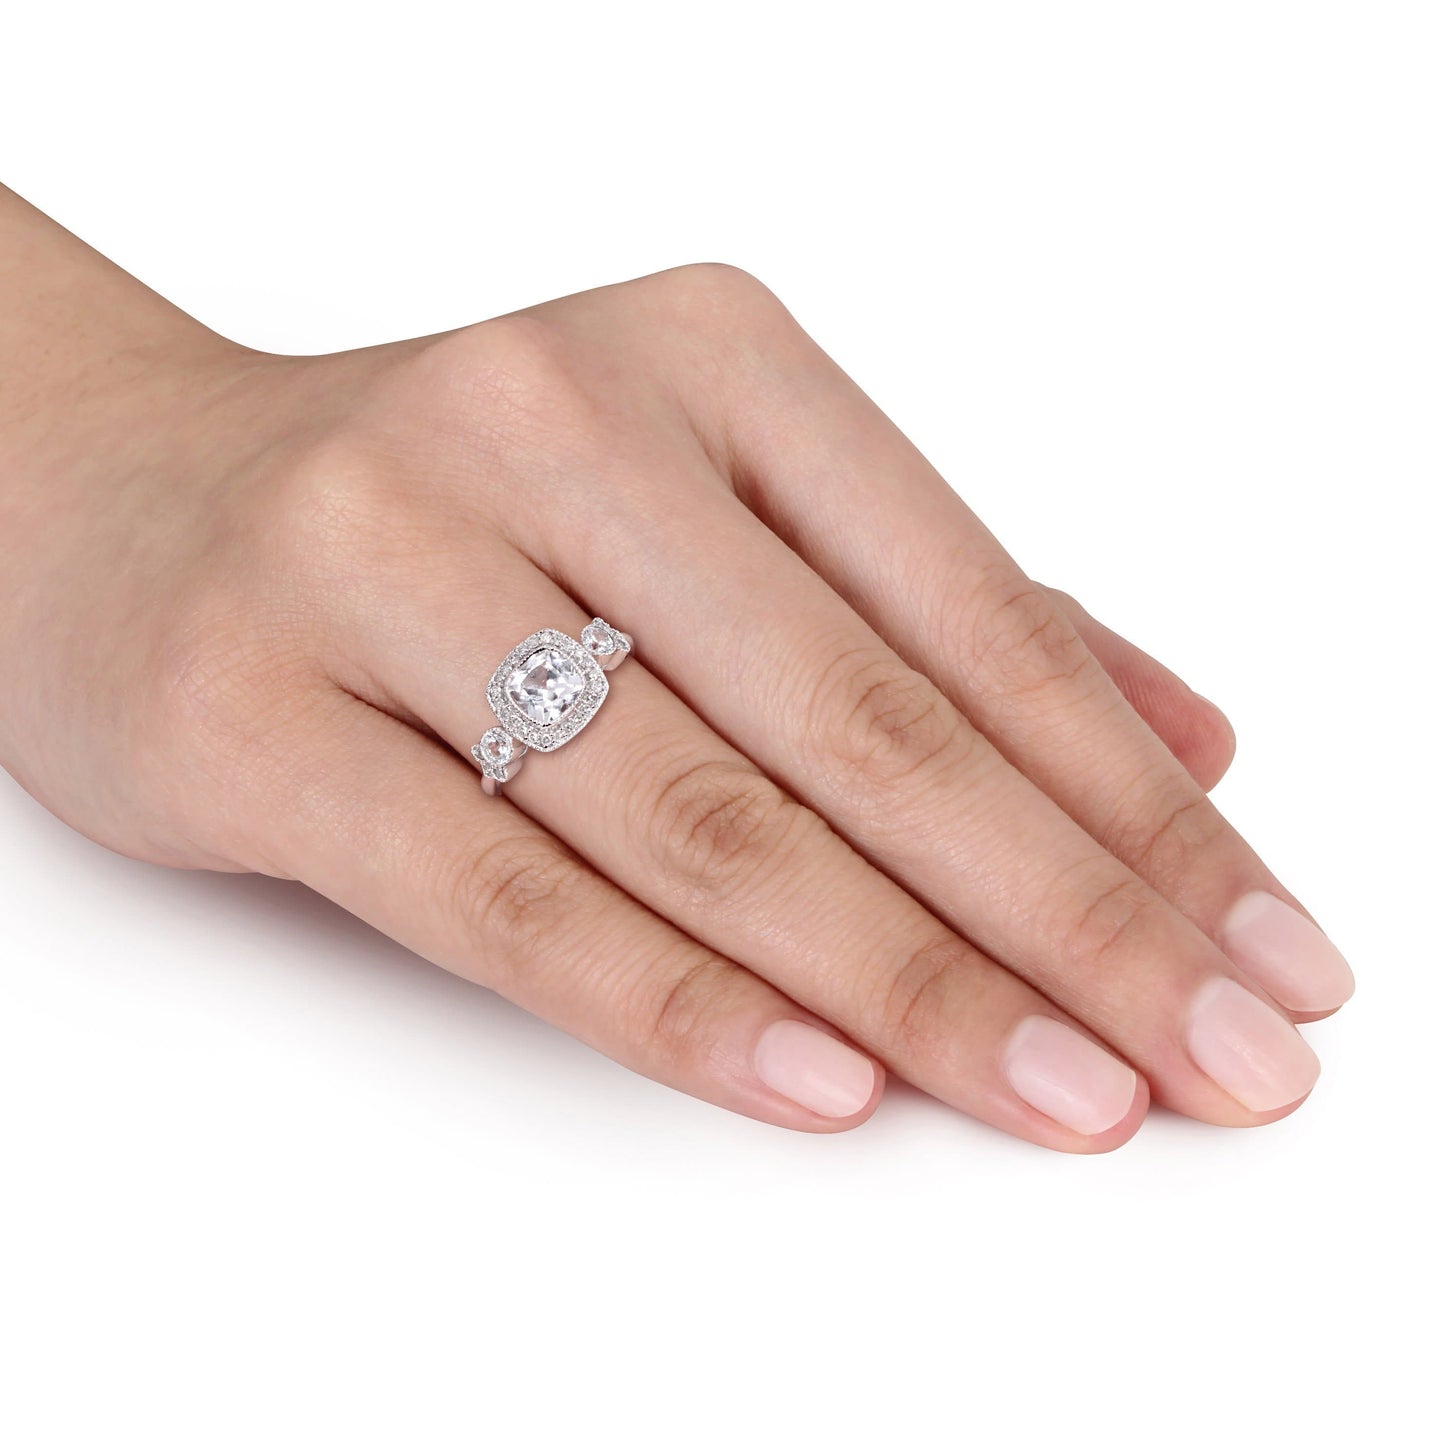 Julie Leah Diamond & White Sapphire Ring in 10k White Gold